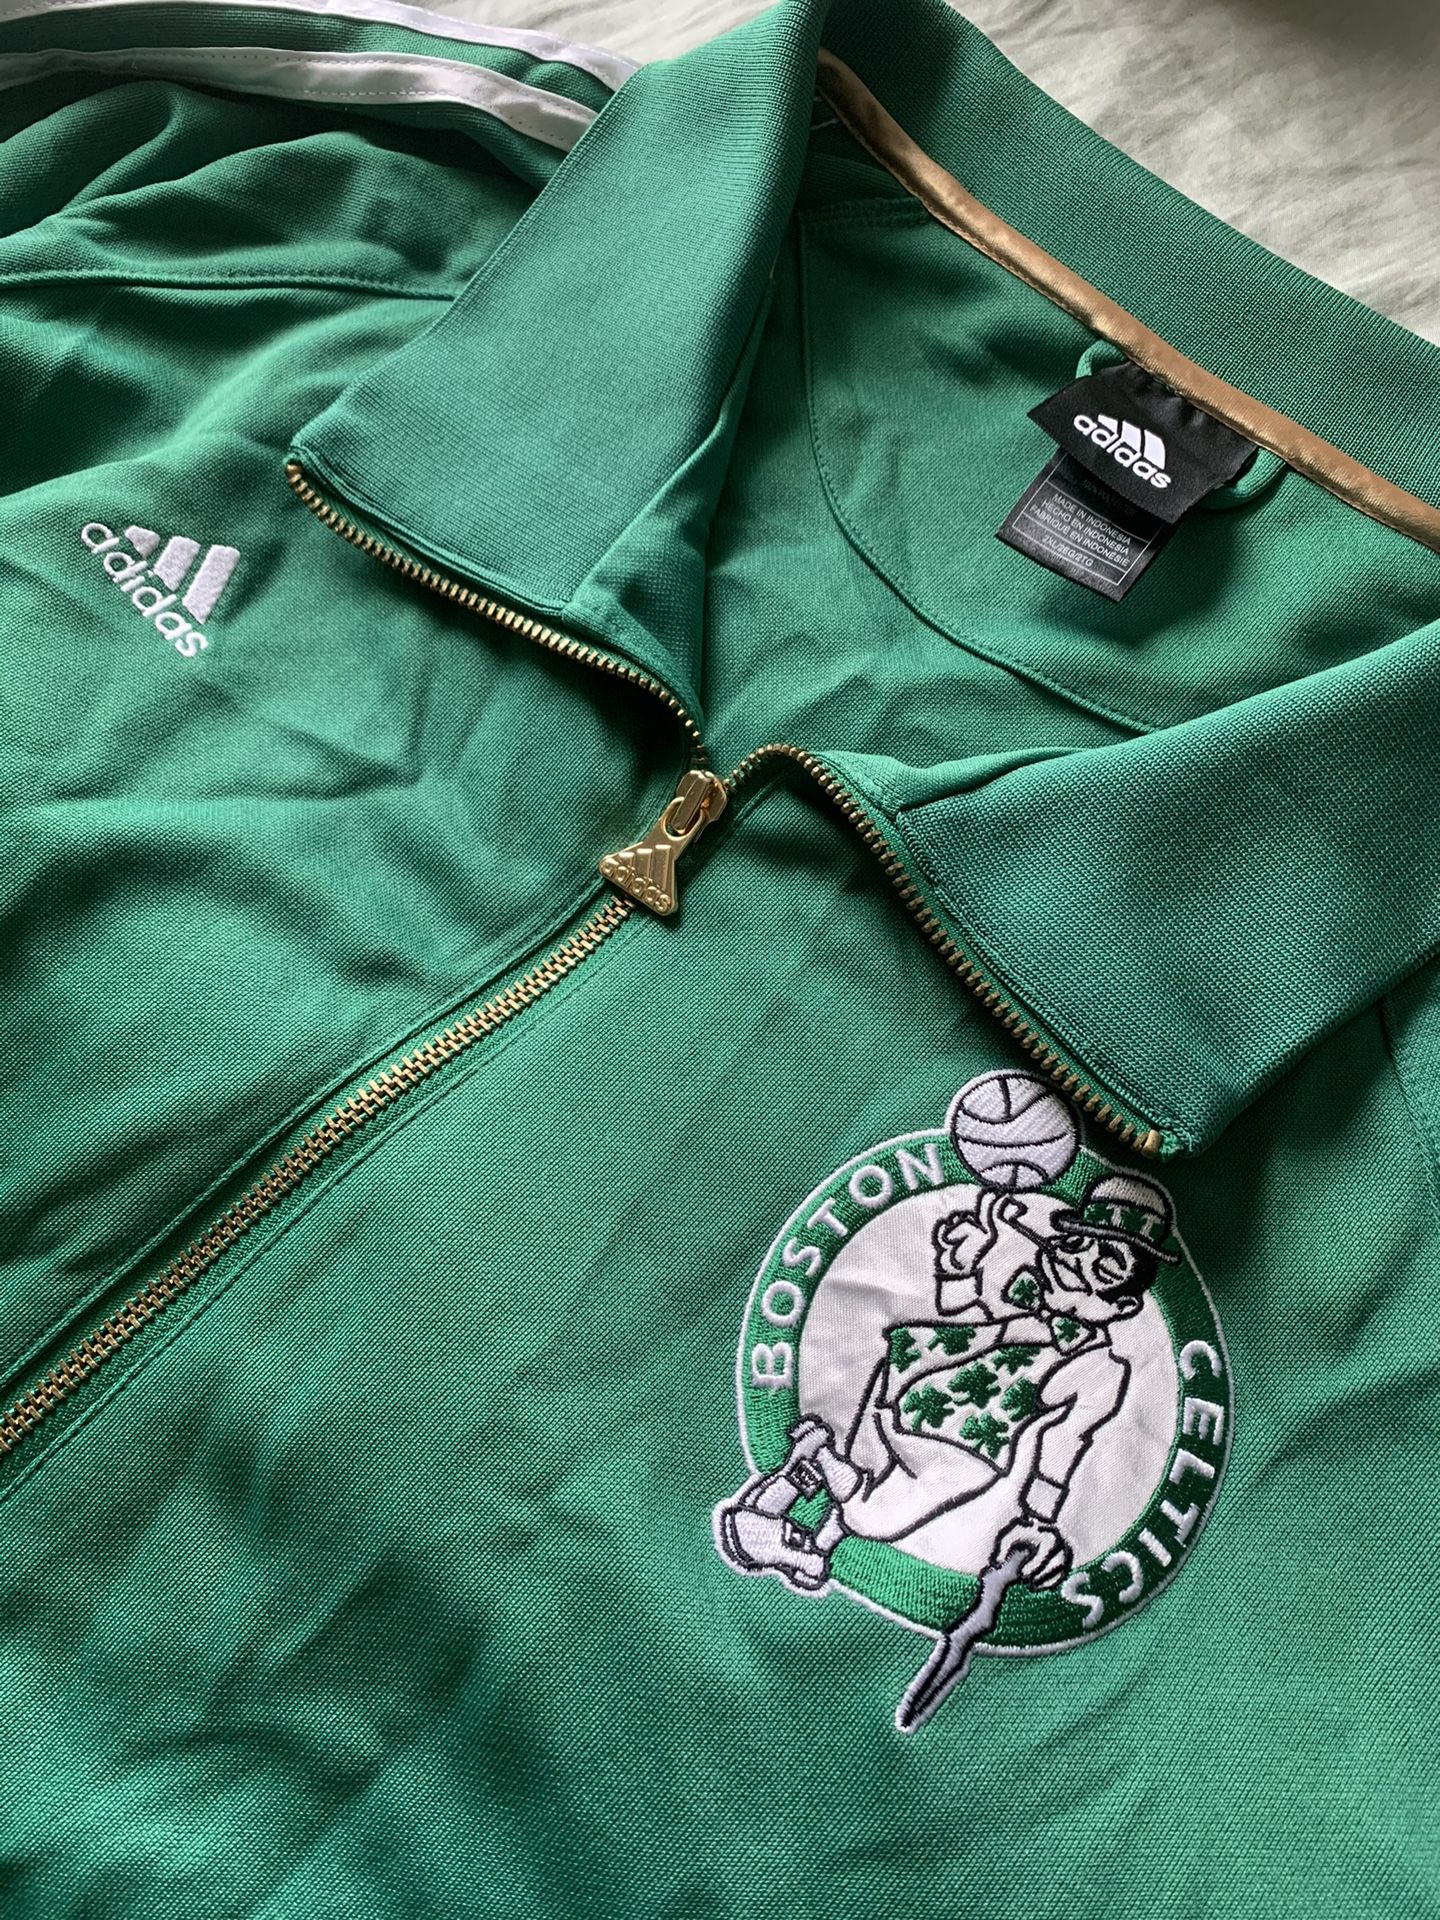 Boston Celtics World Champion Anniversary Edition Track Jacket Tricot XL for Sale in Houston, TX OfferUp